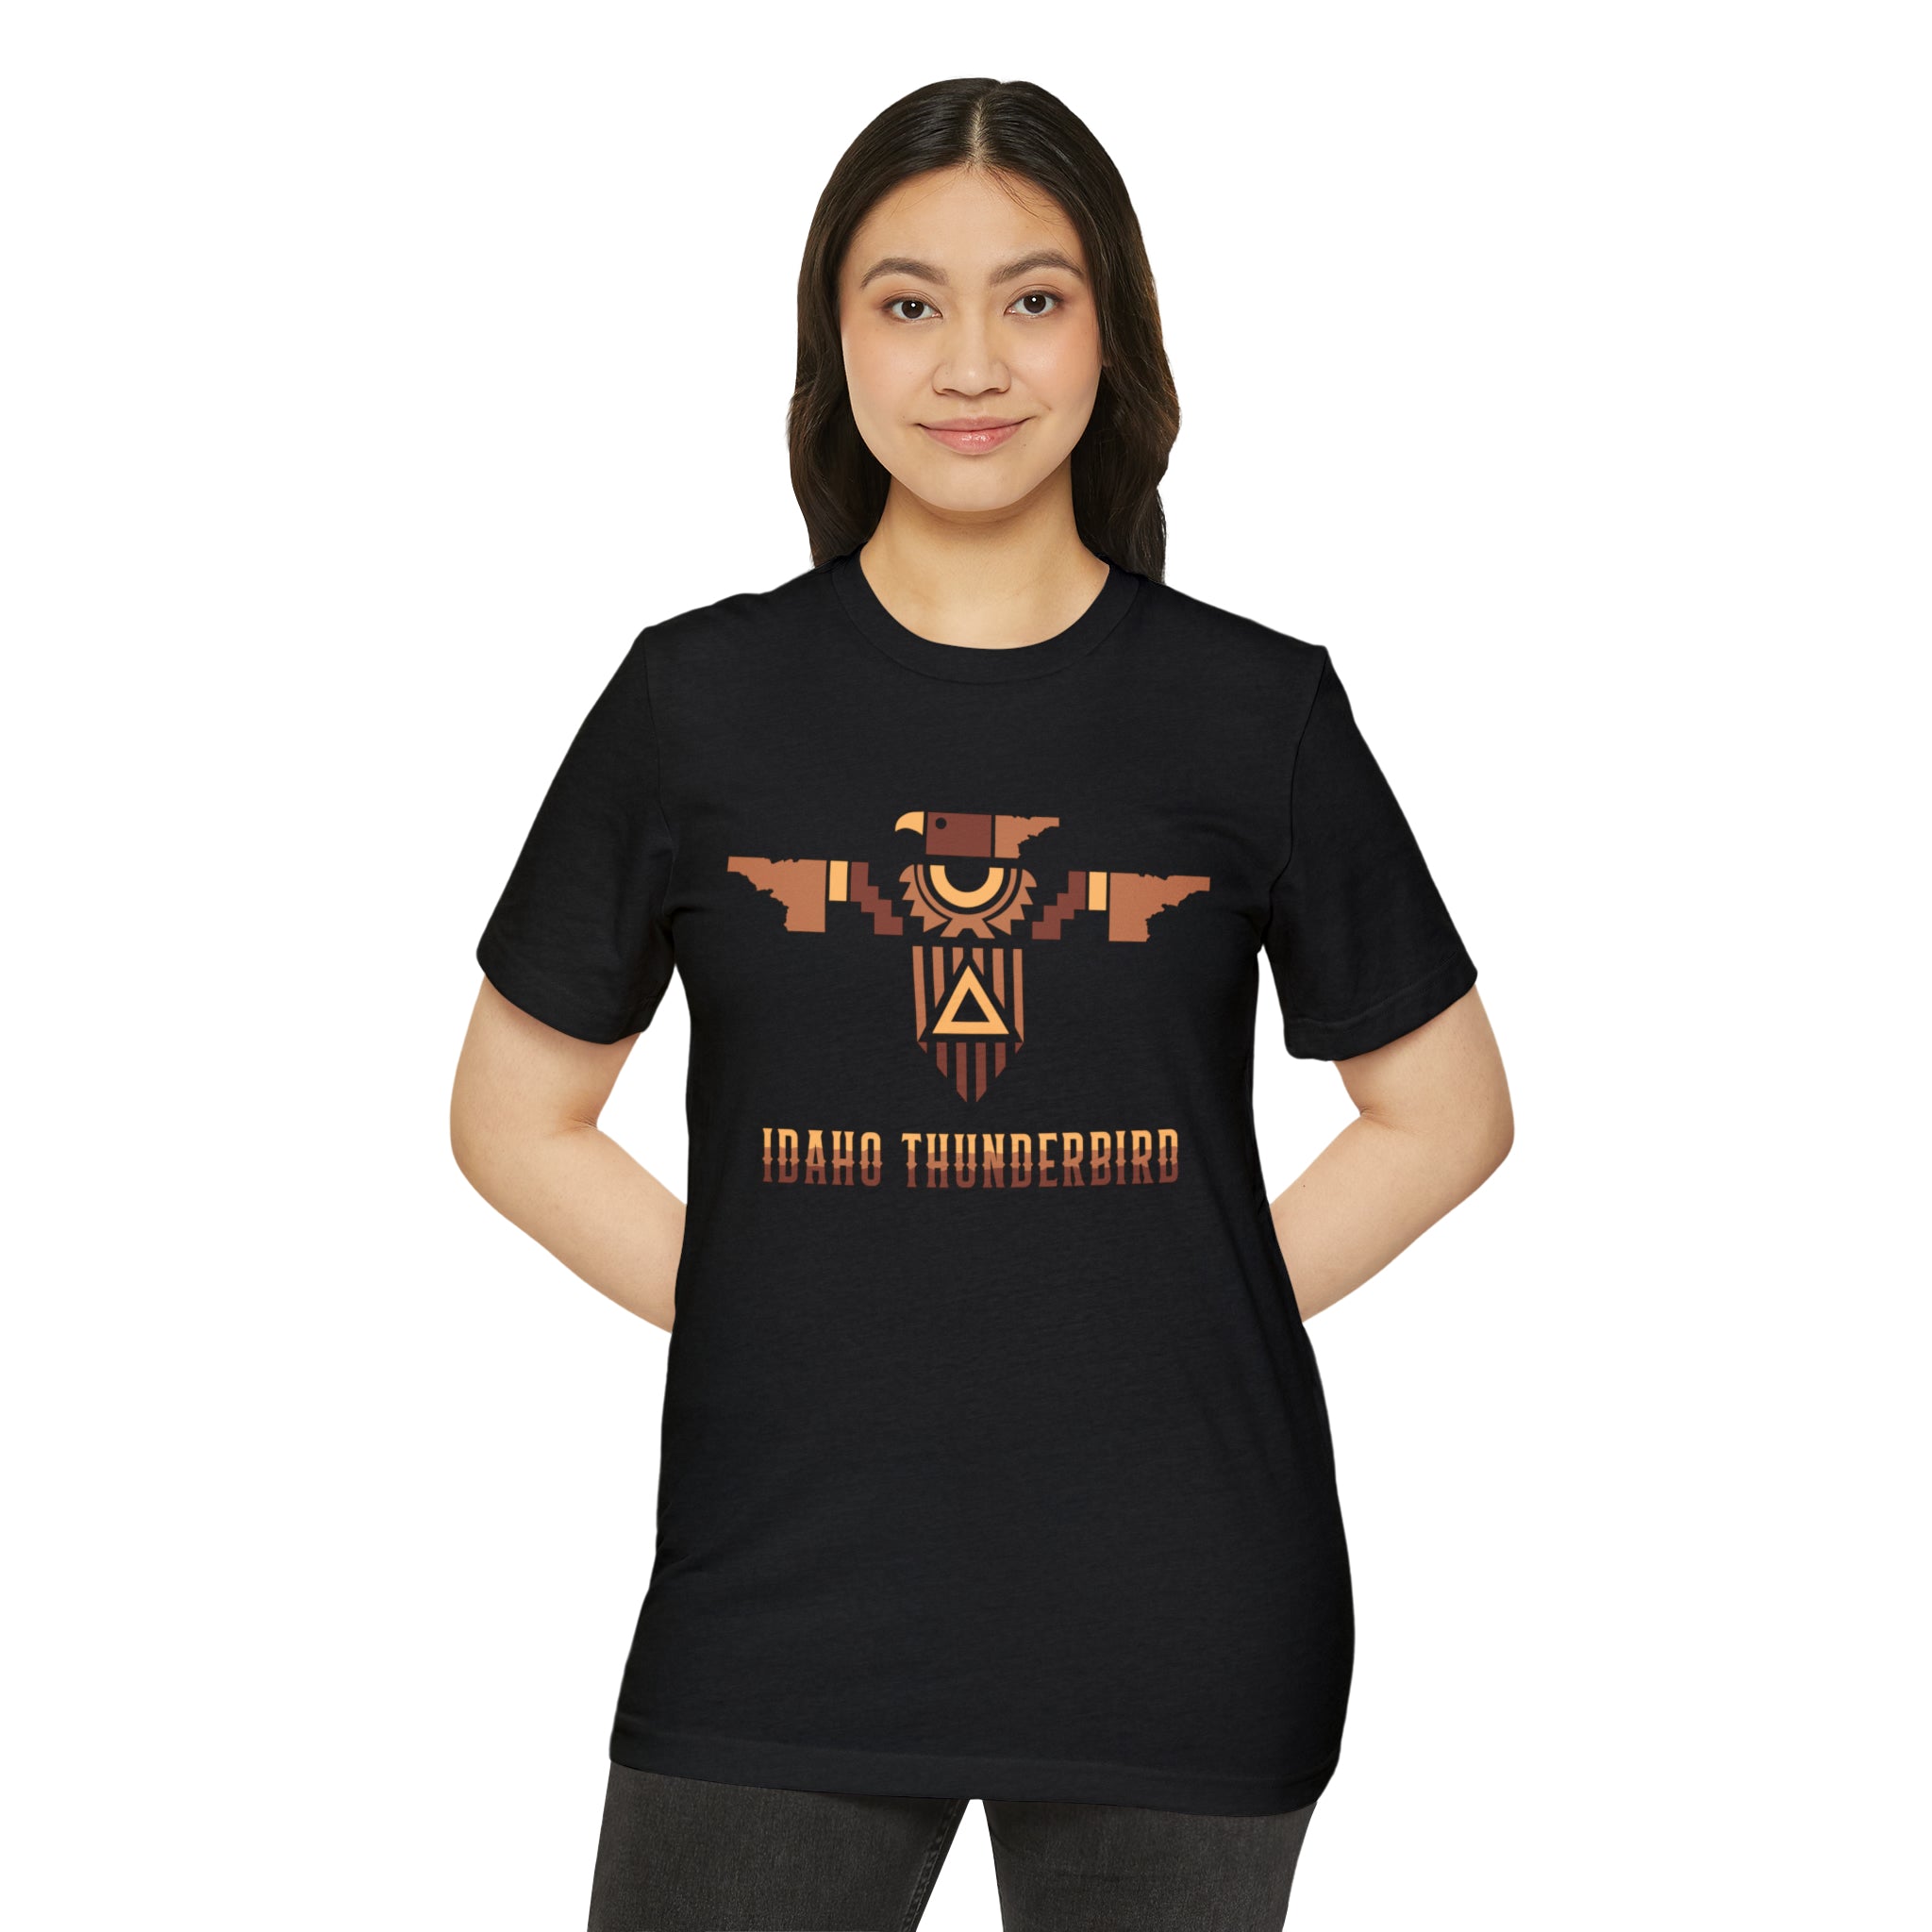 Idaho Thunderbird — Unisex Recycled Organic T-Shirt